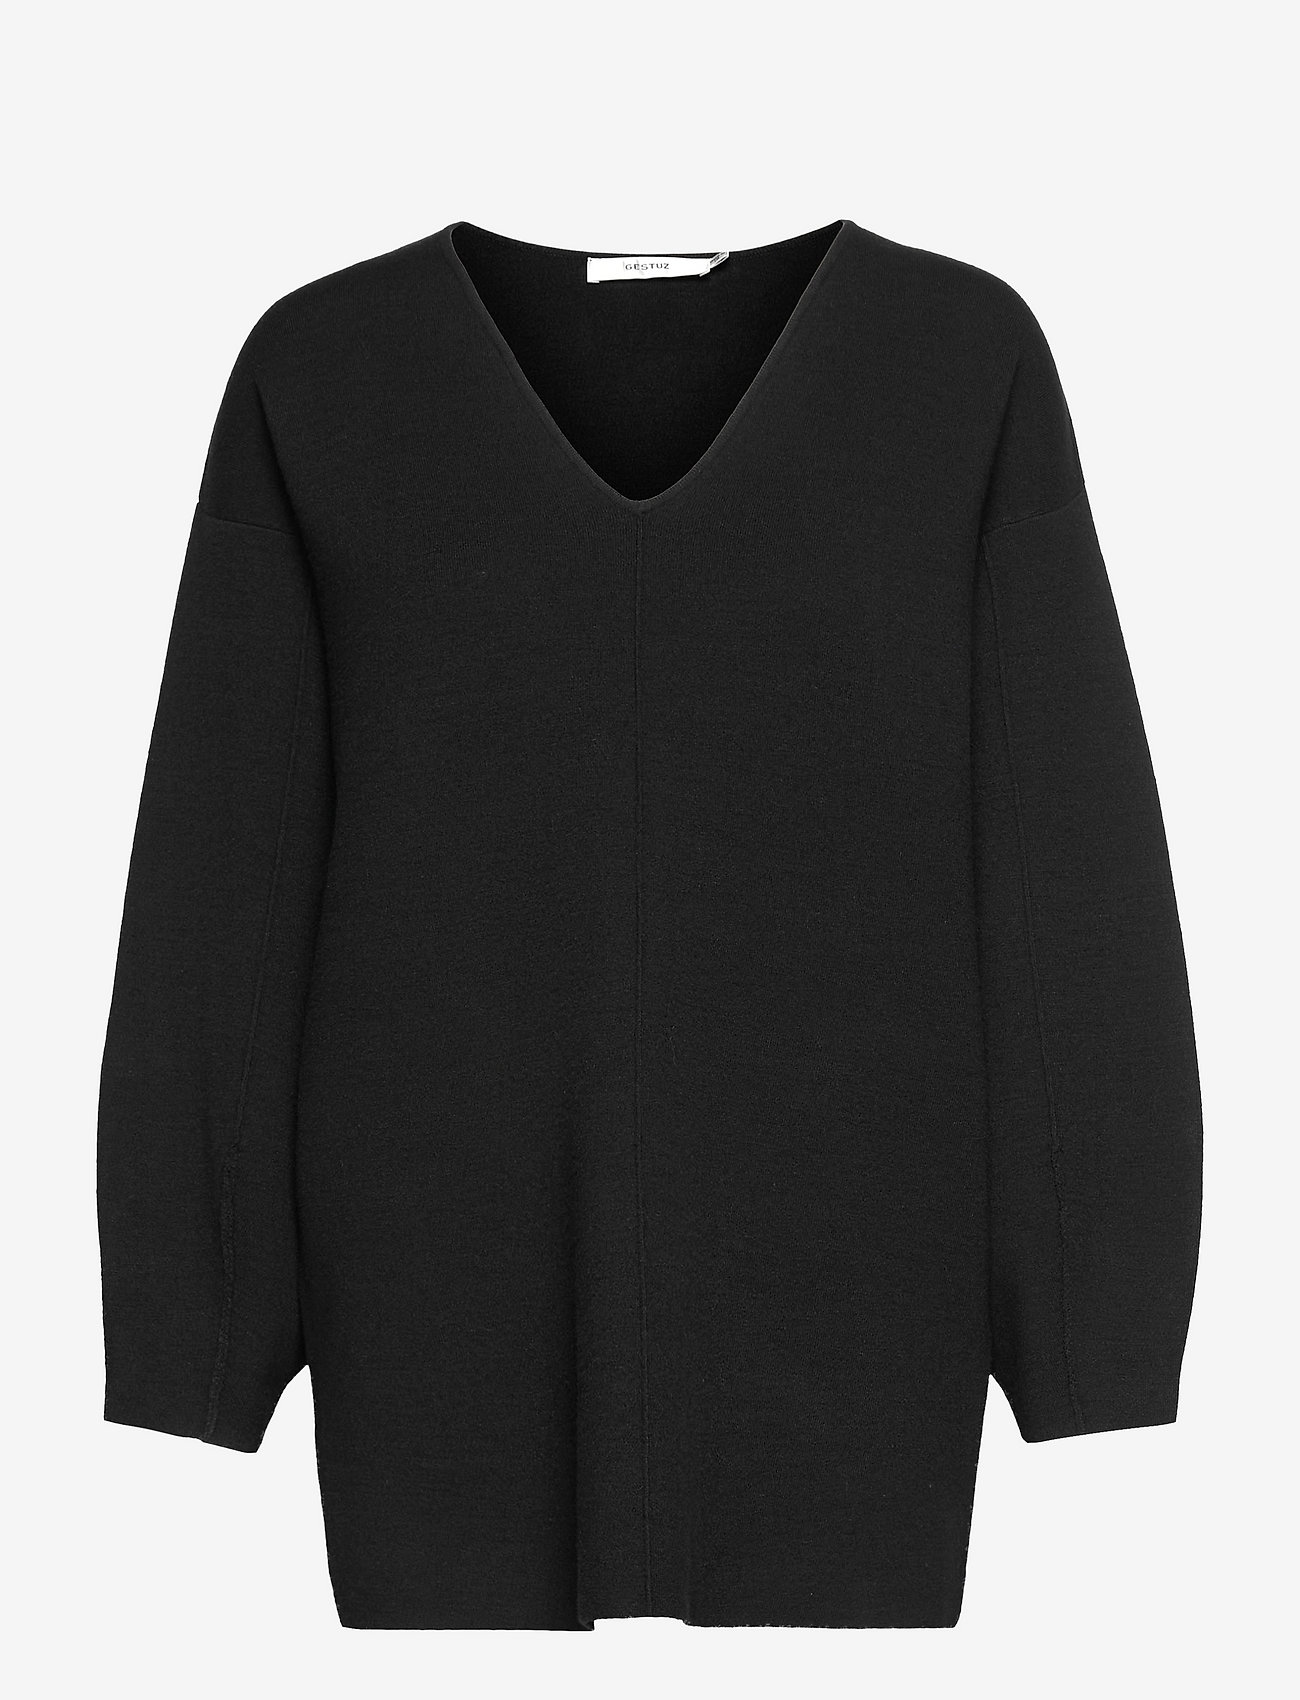 Gestuz - TalliGZ V-pullover - džemprid - black - 0